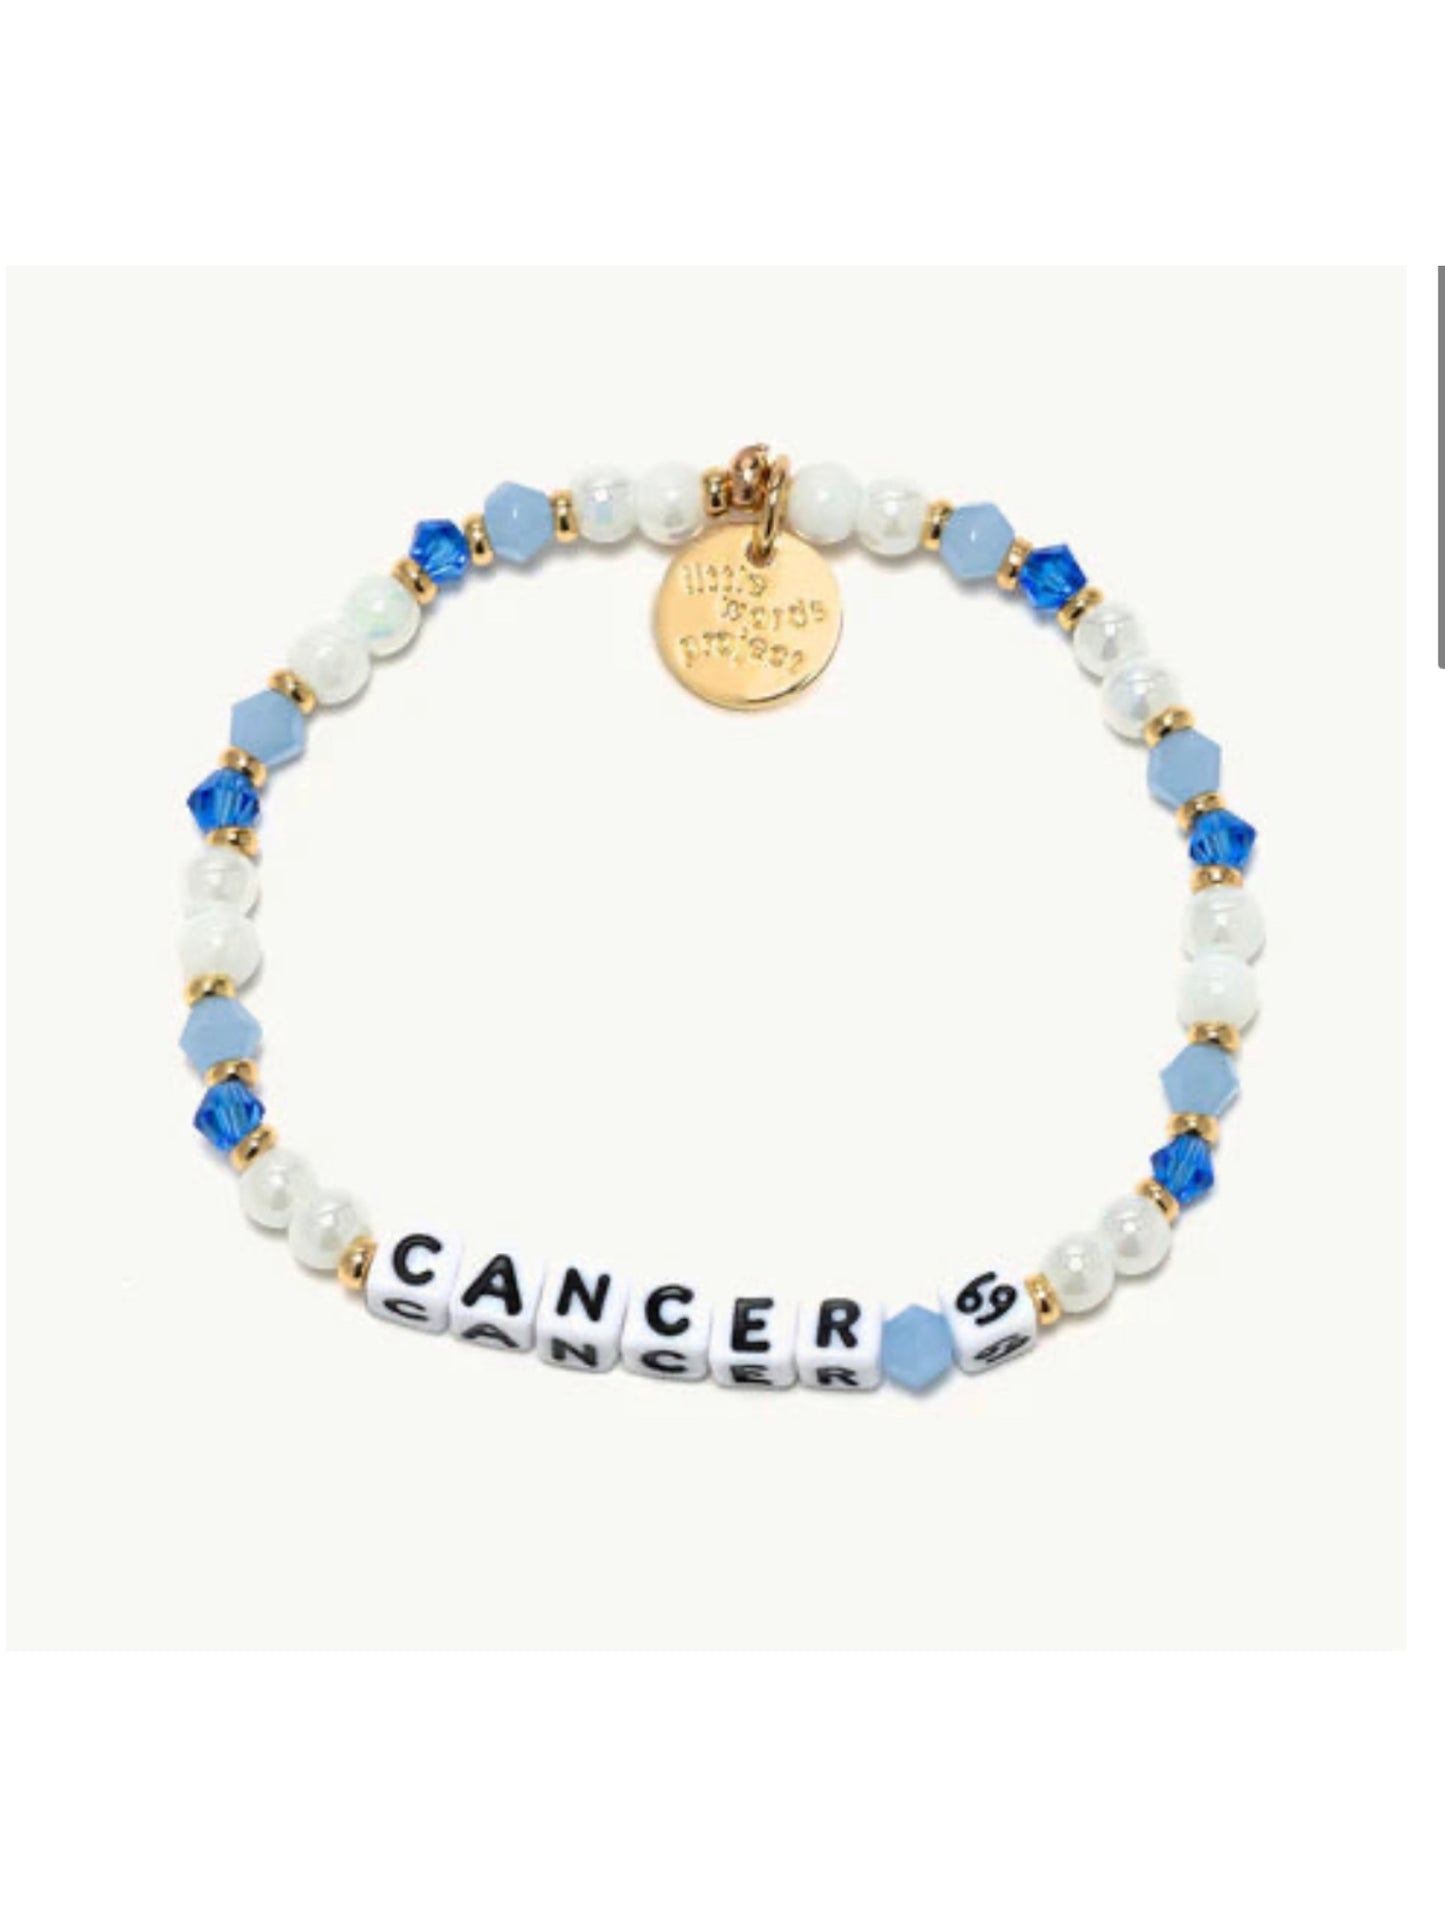 Little Words Project Cancer Bracelet